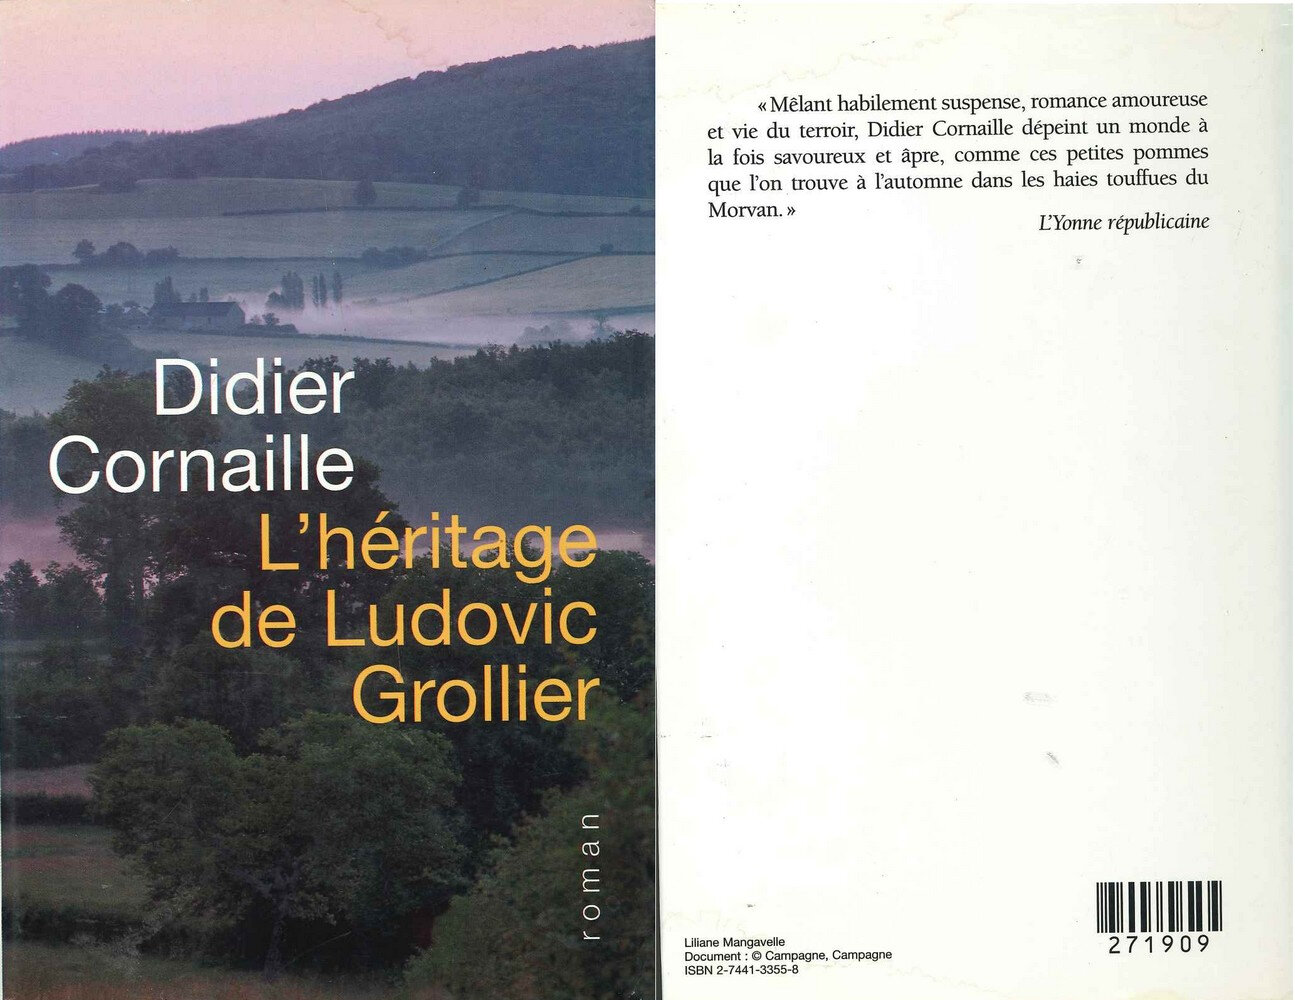 <a href="/node/3579">L'héritage de Ludovic Grollier</a>